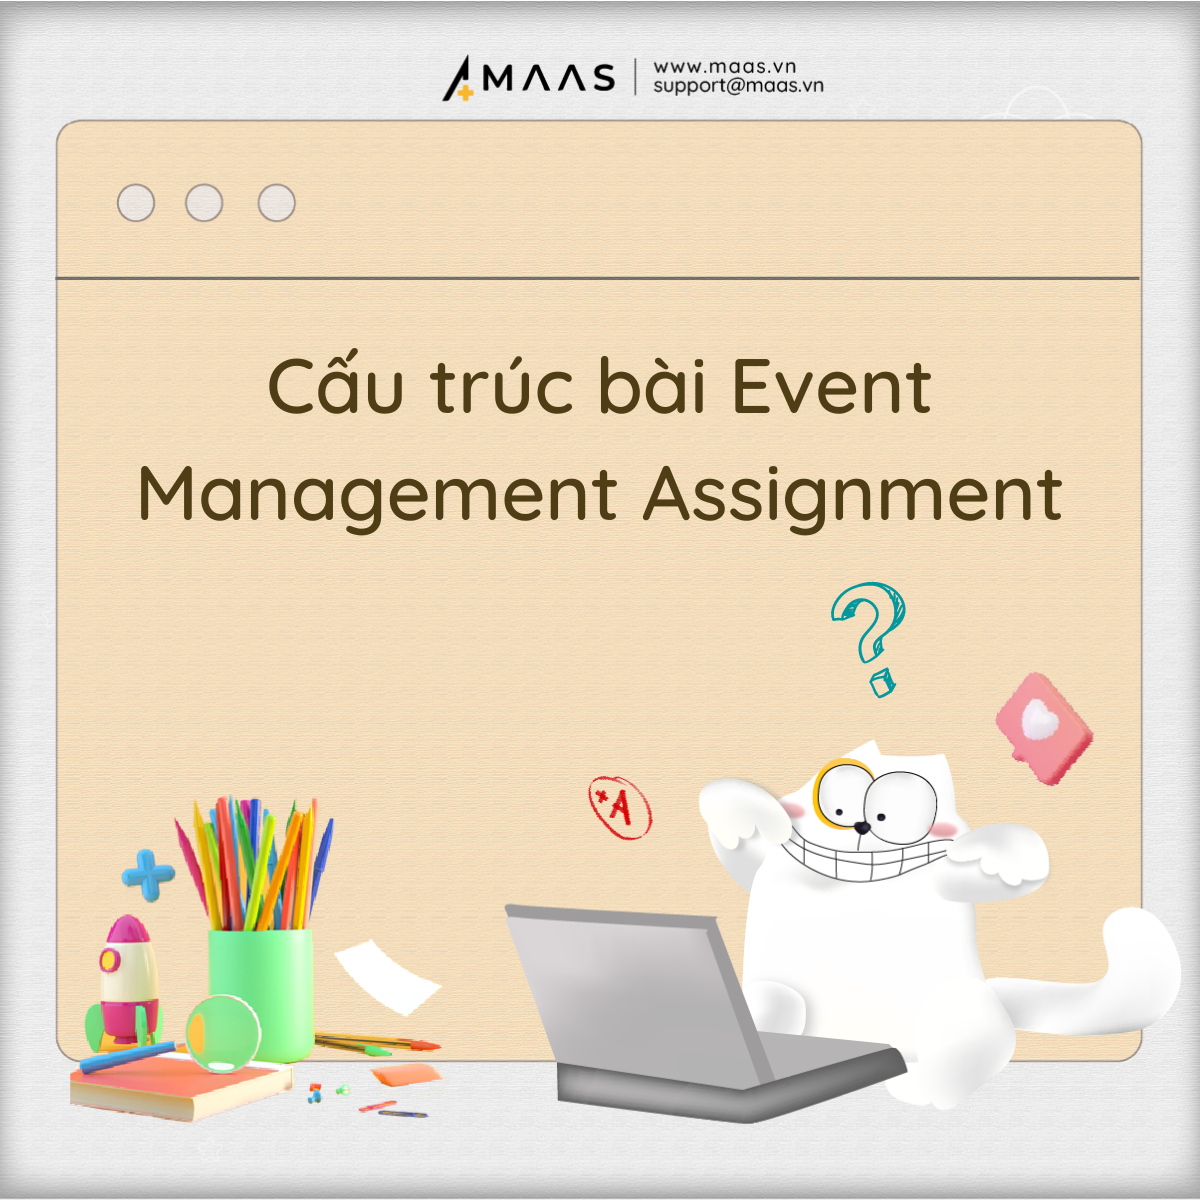 Event Management Assignment